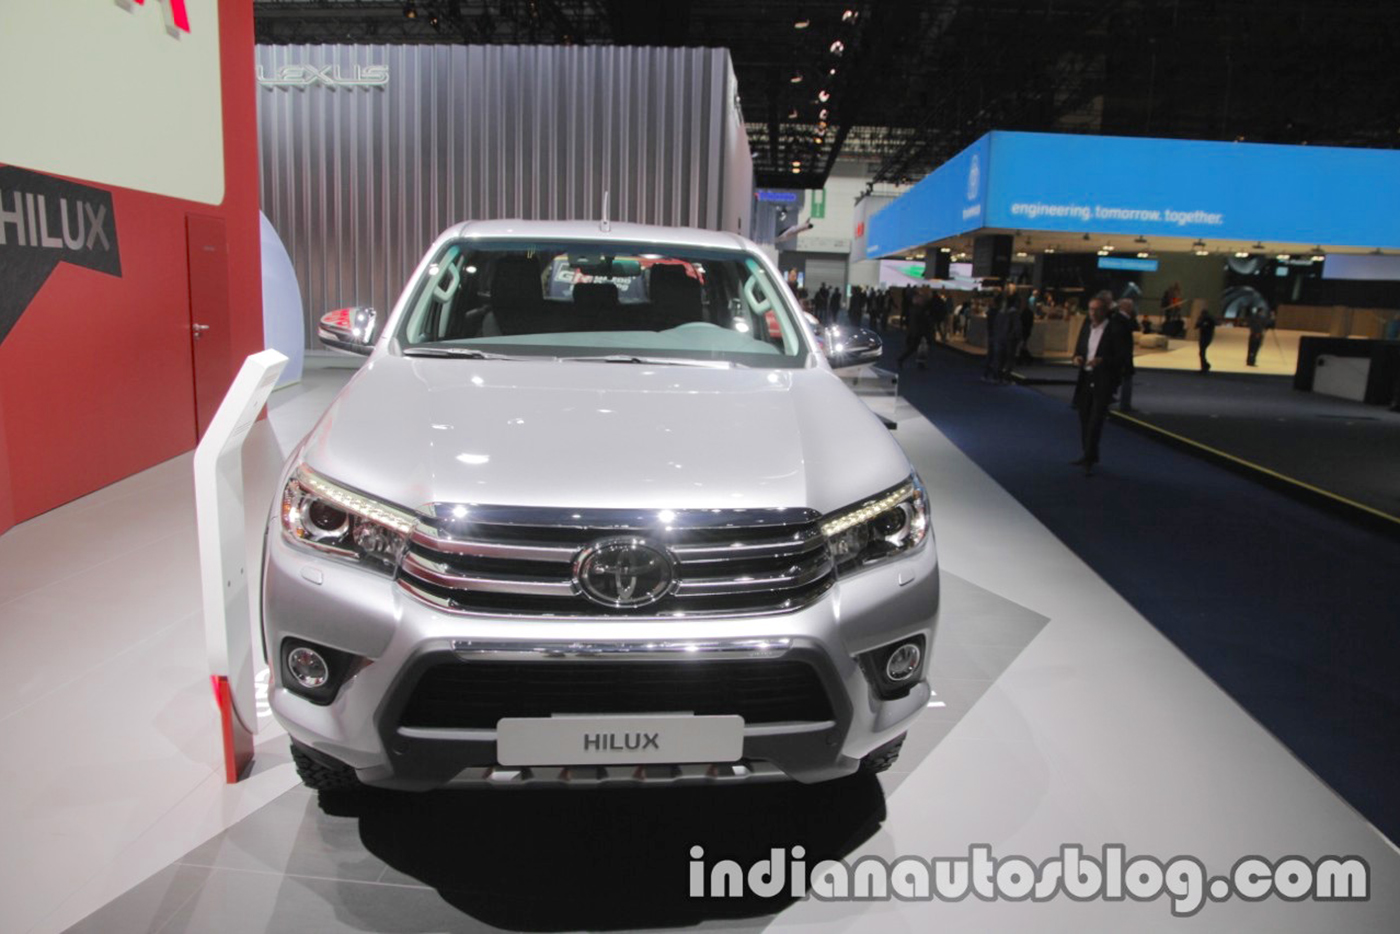 Toyota Ra Mat Hilux Phien Ban Dac Biet Sau 50 Nam (4)